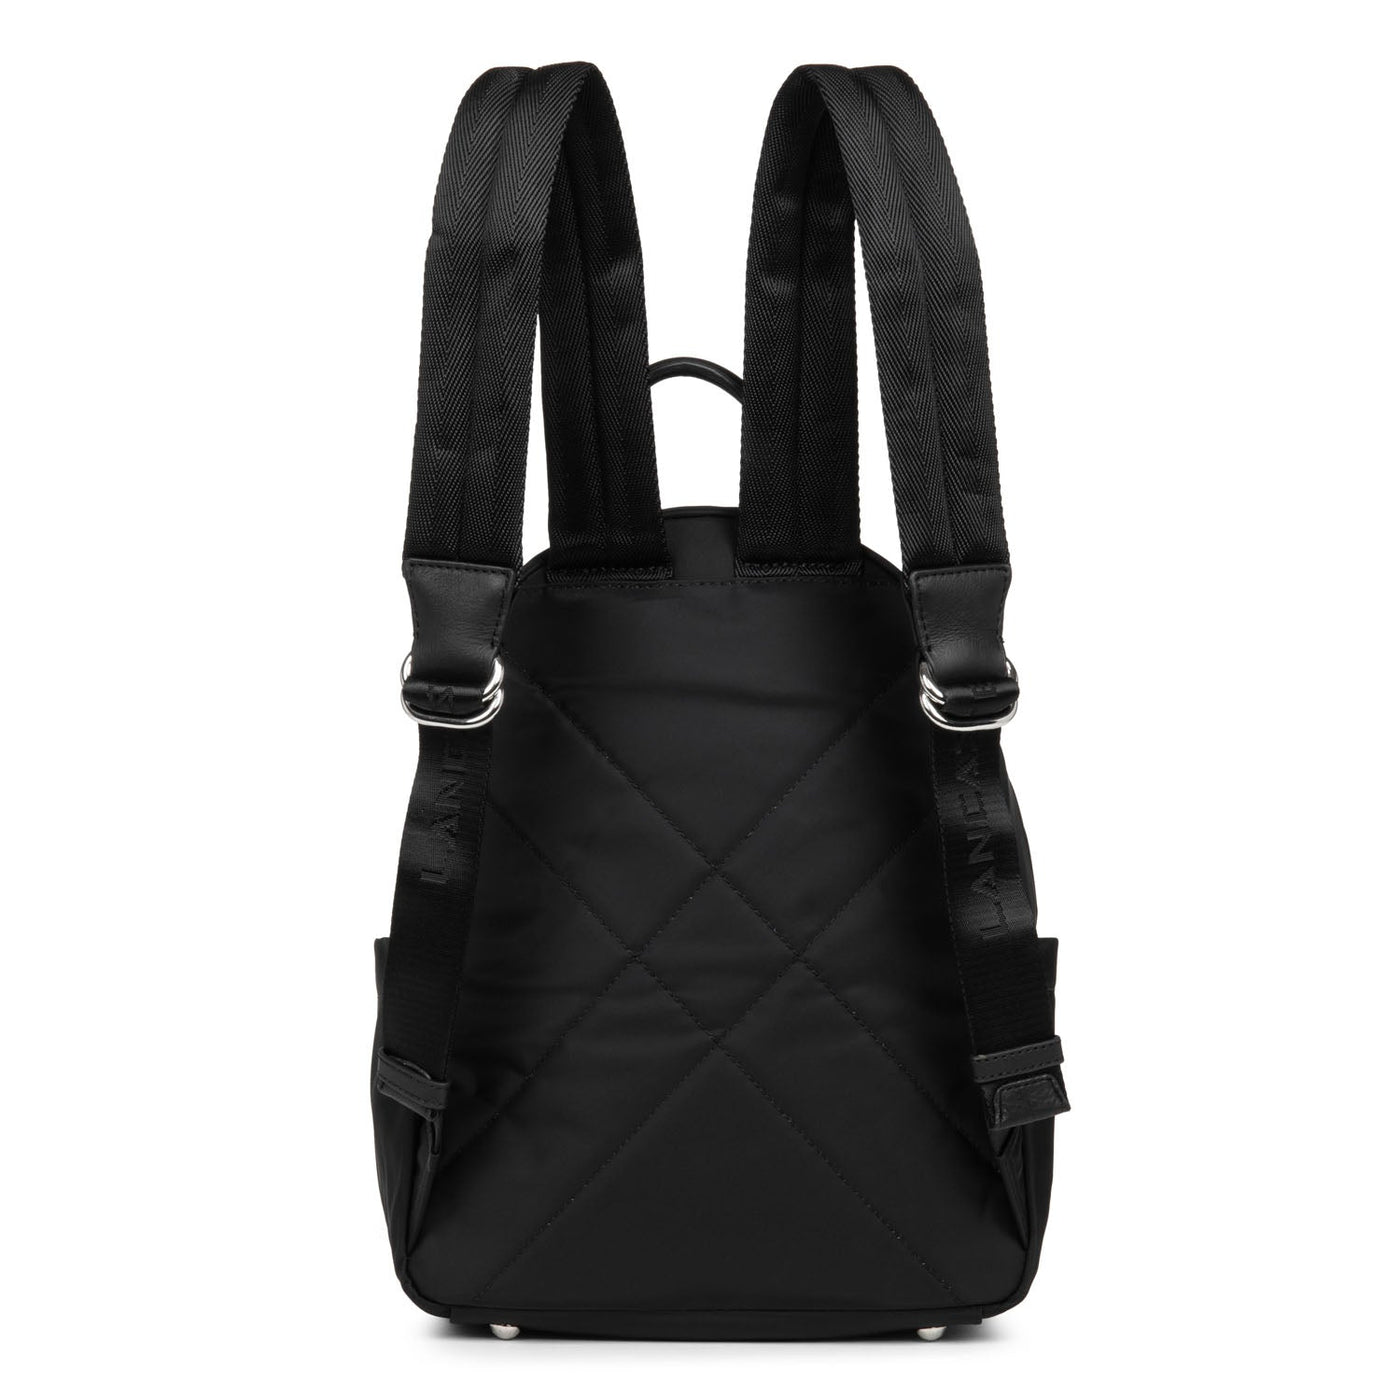 backpack - basic sport #couleur_noir